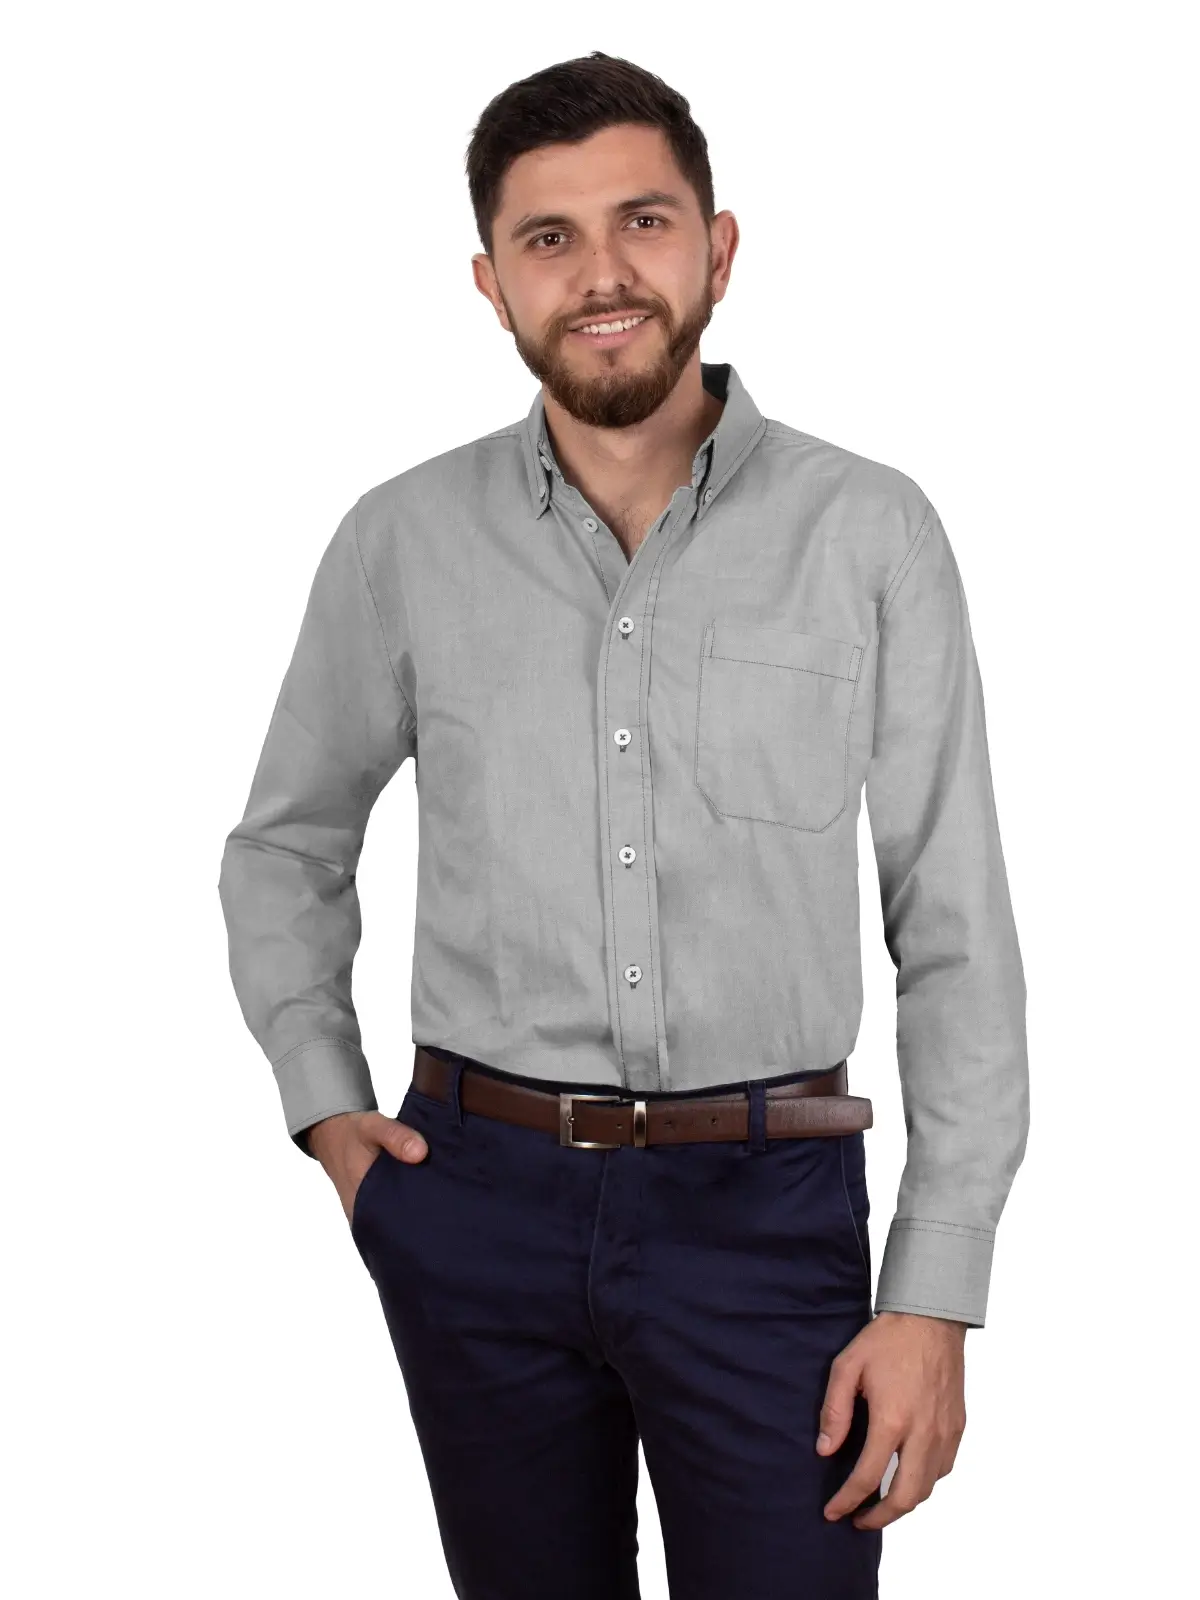 Men's Oxford Shirts Gray color